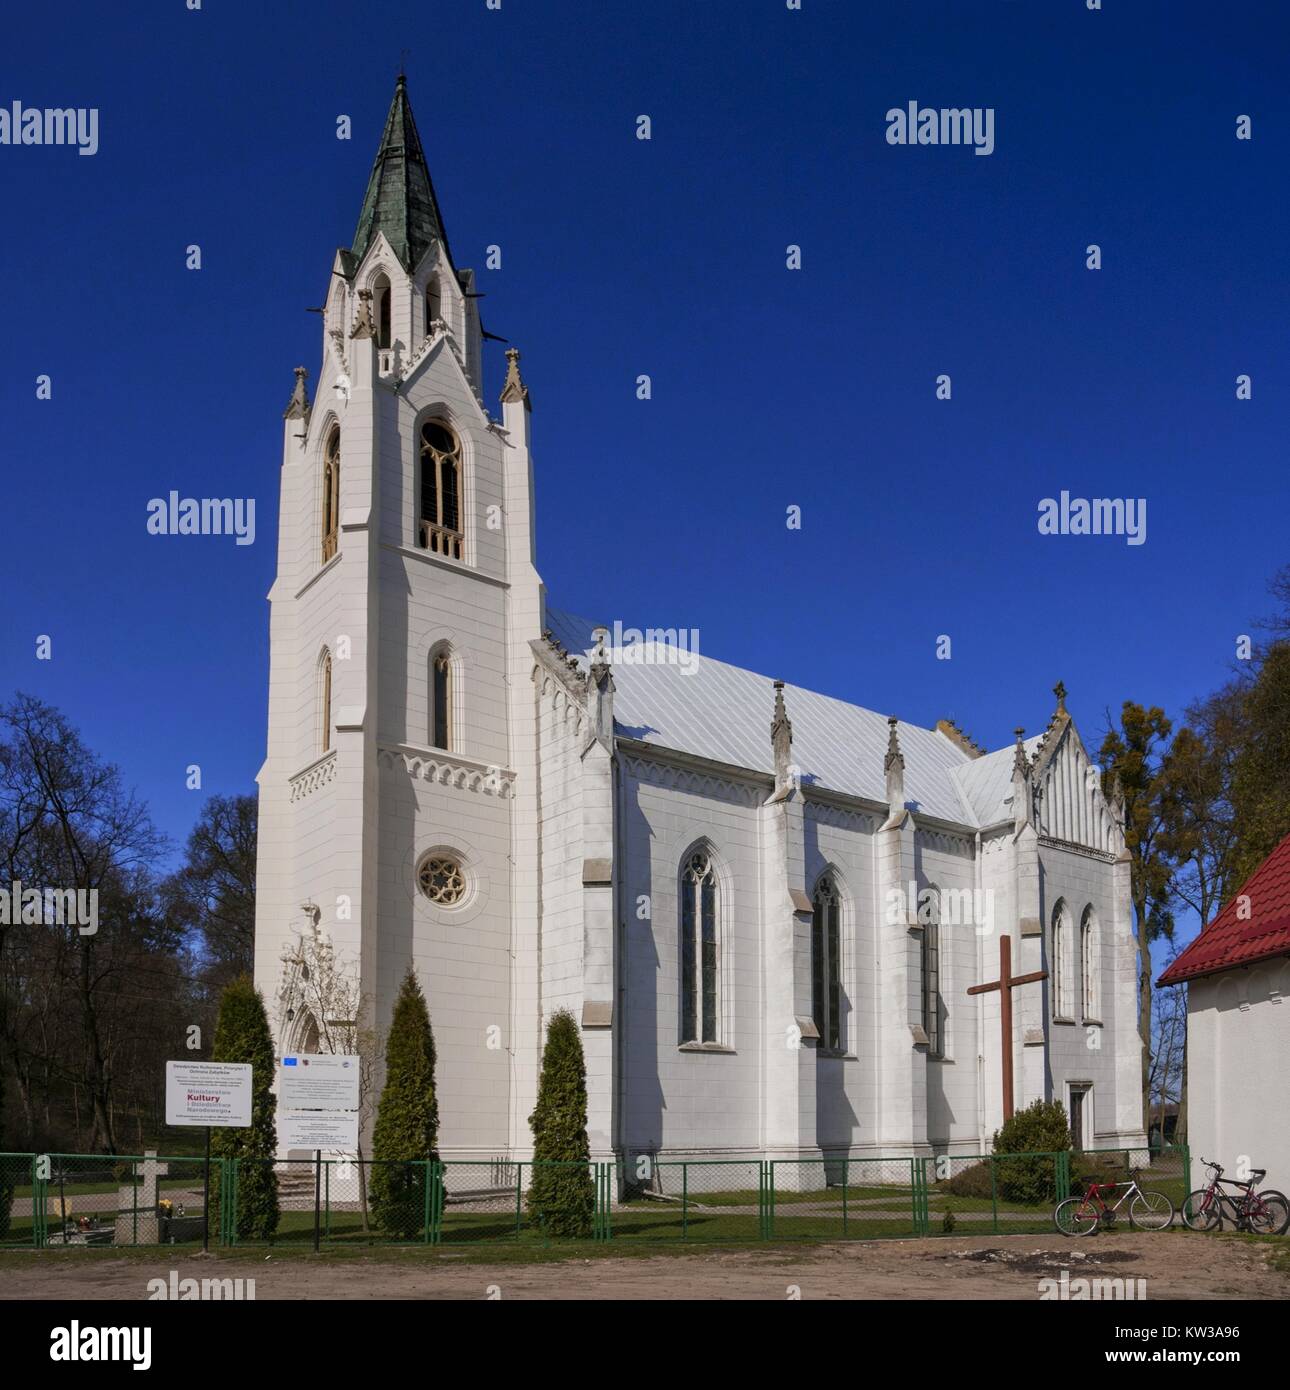 Neo-Gothic Church of St. Adalbert, Jablonowo Pomorskie, Kuyavian-Pomeranian Voivodeship, Poland. Stock Photo